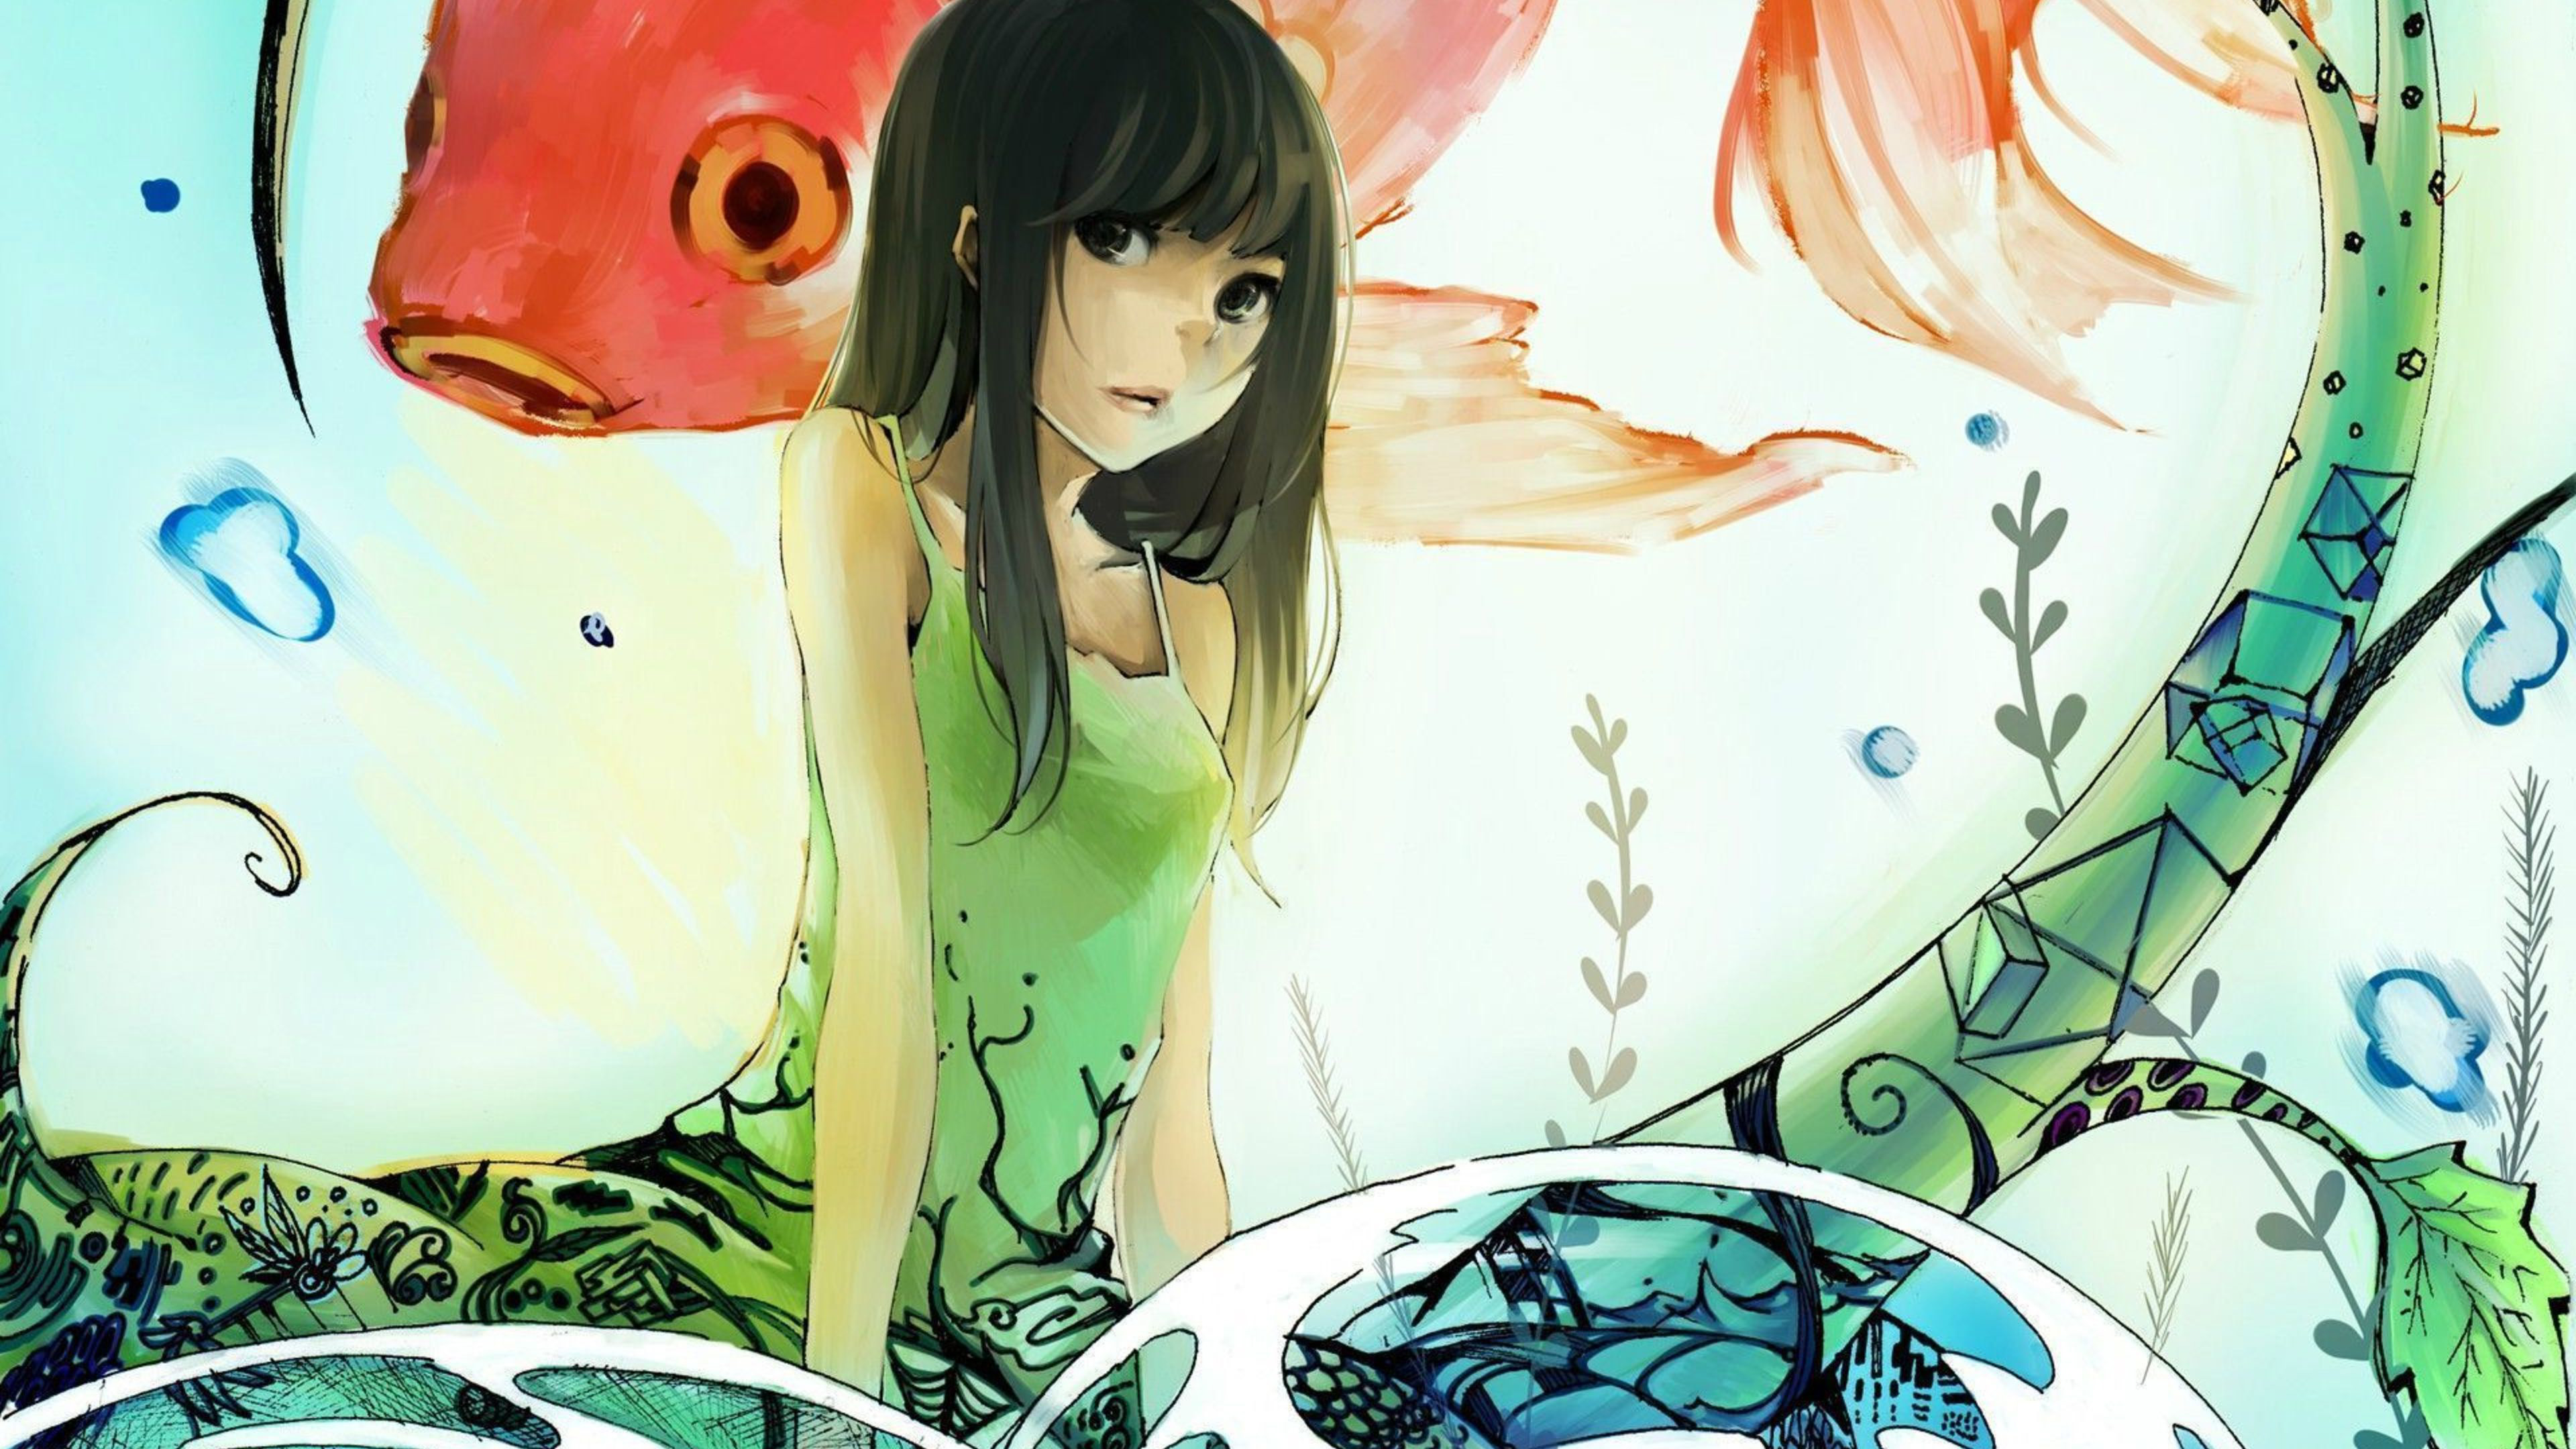 Free download Anime Girl And Koi Fish 4K Wallpaper [3840x2160] for your Desktop, Mobile & Tablet. Explore 4K Anime WallpaperK HD Wallpaper